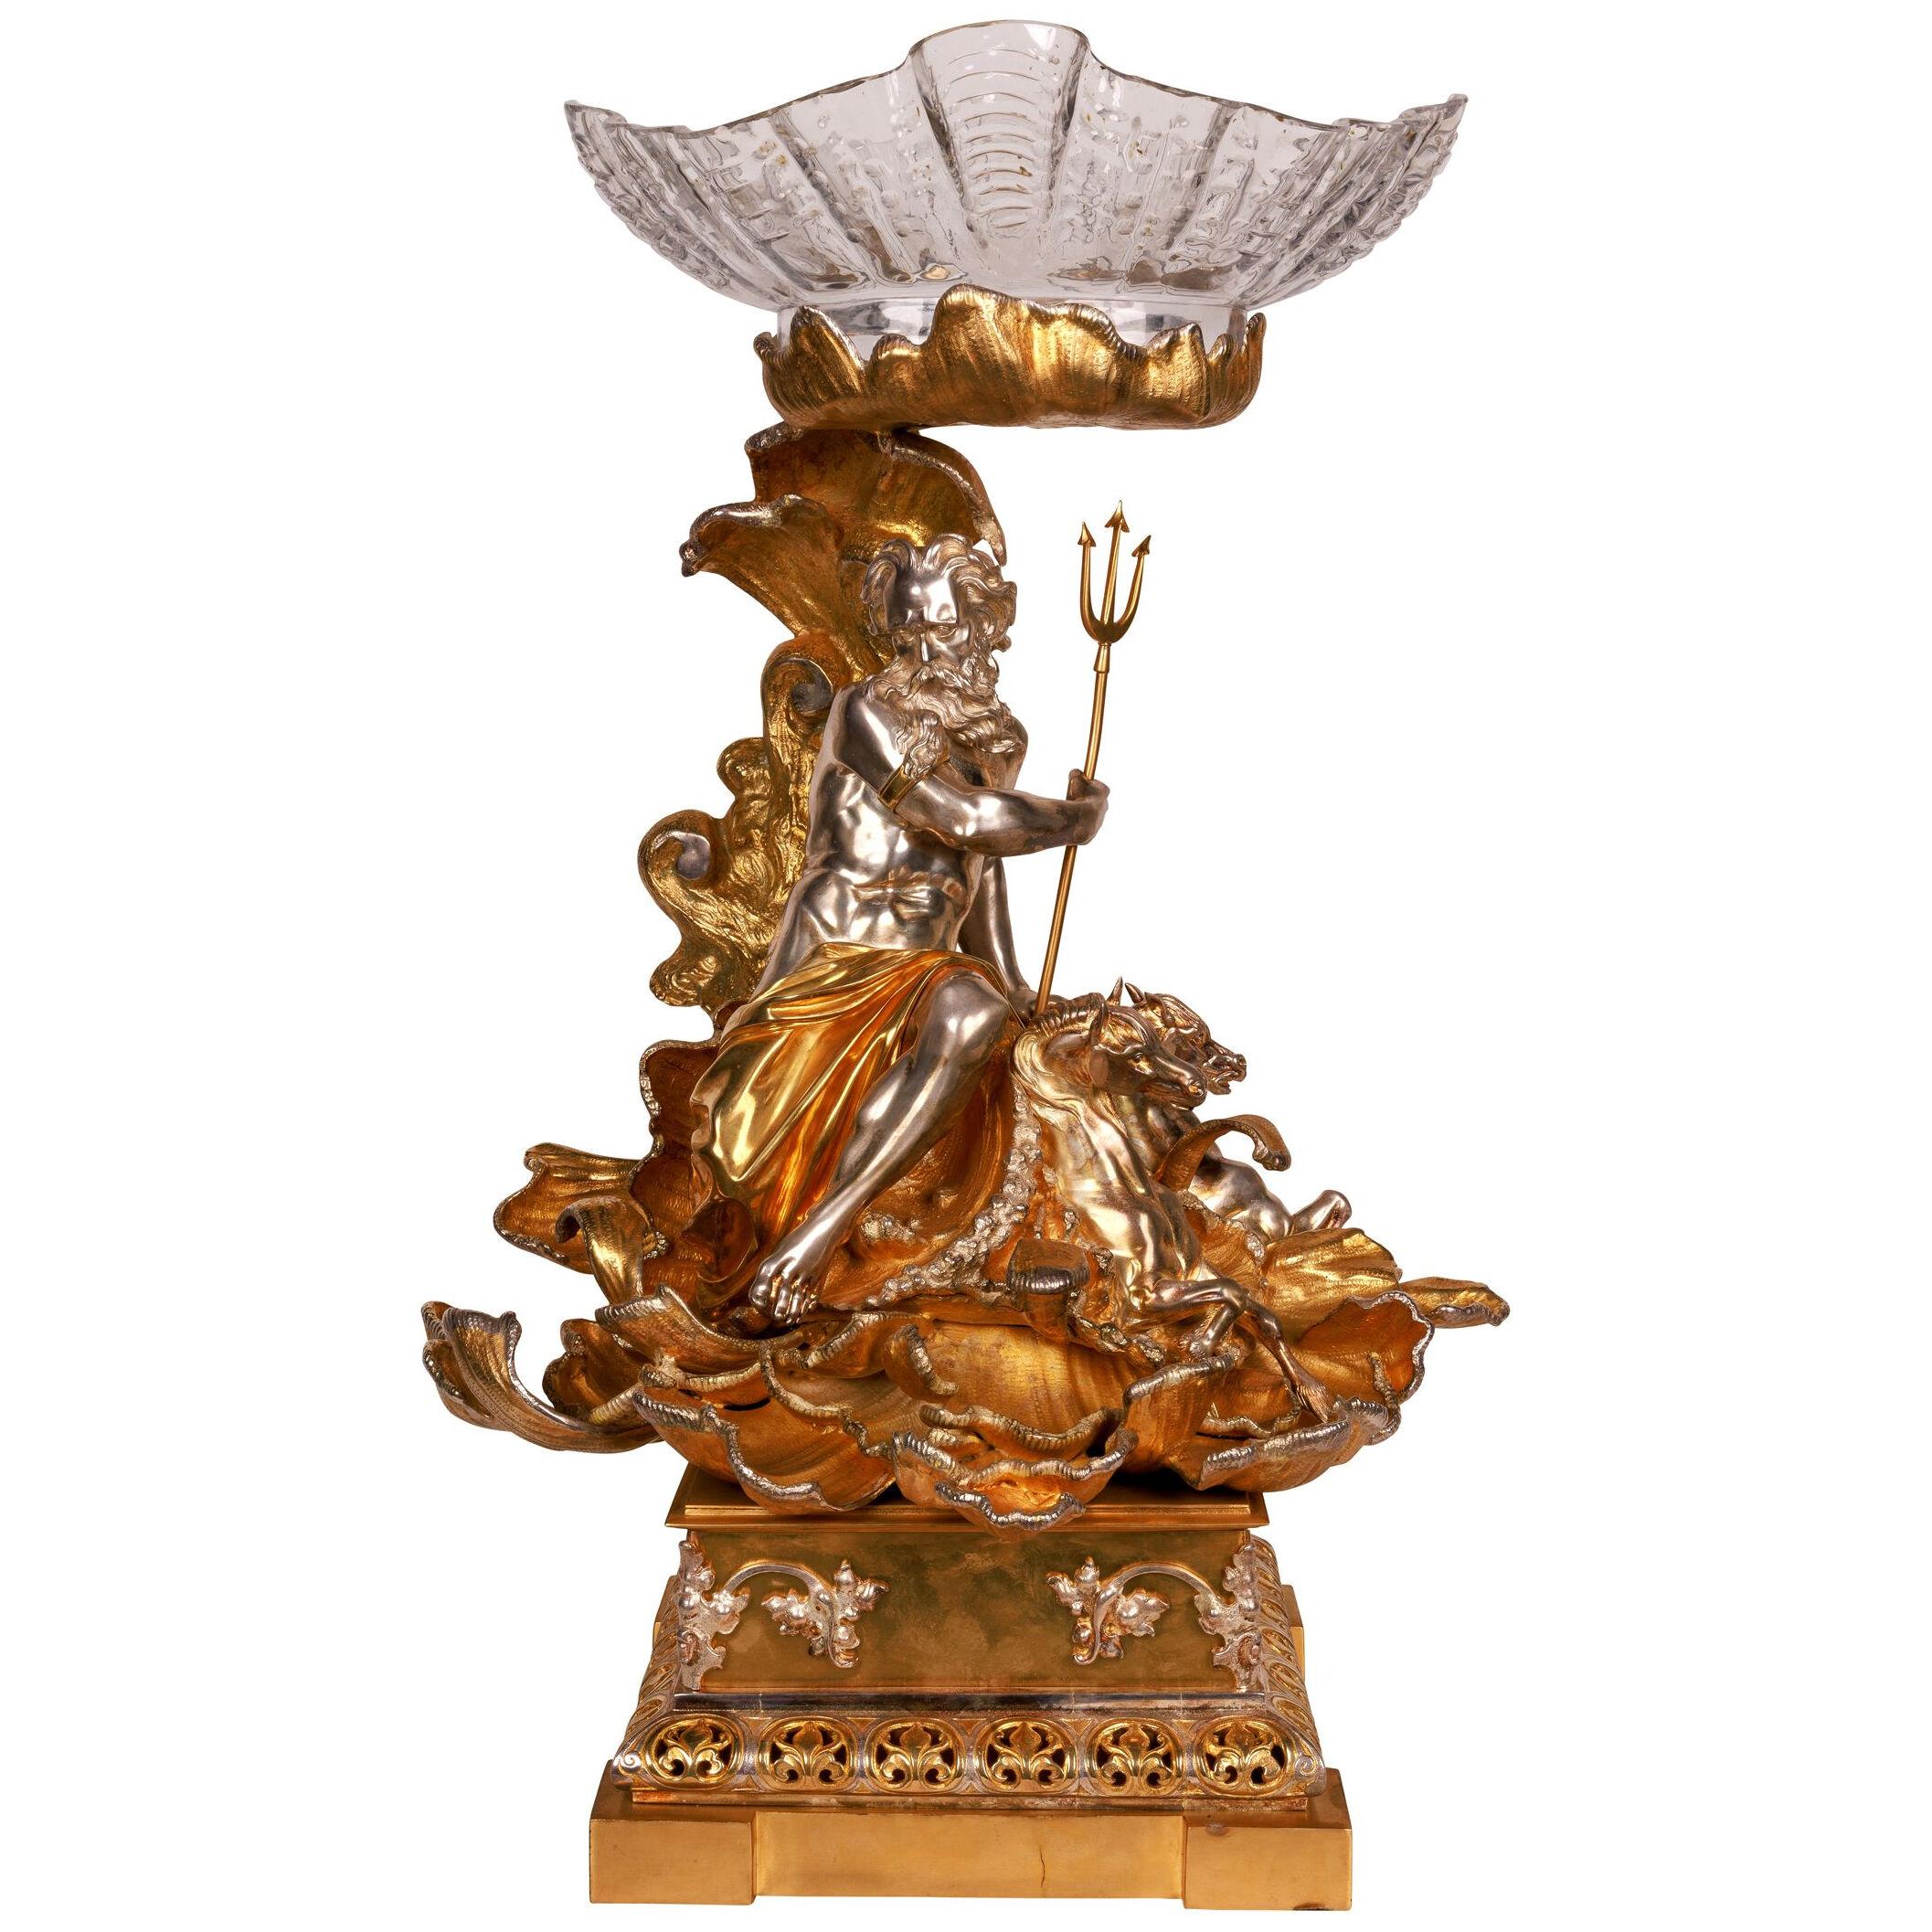 Monumental Silvered and Gilt-Bronze Glass Centerpiece of "Poseidon"